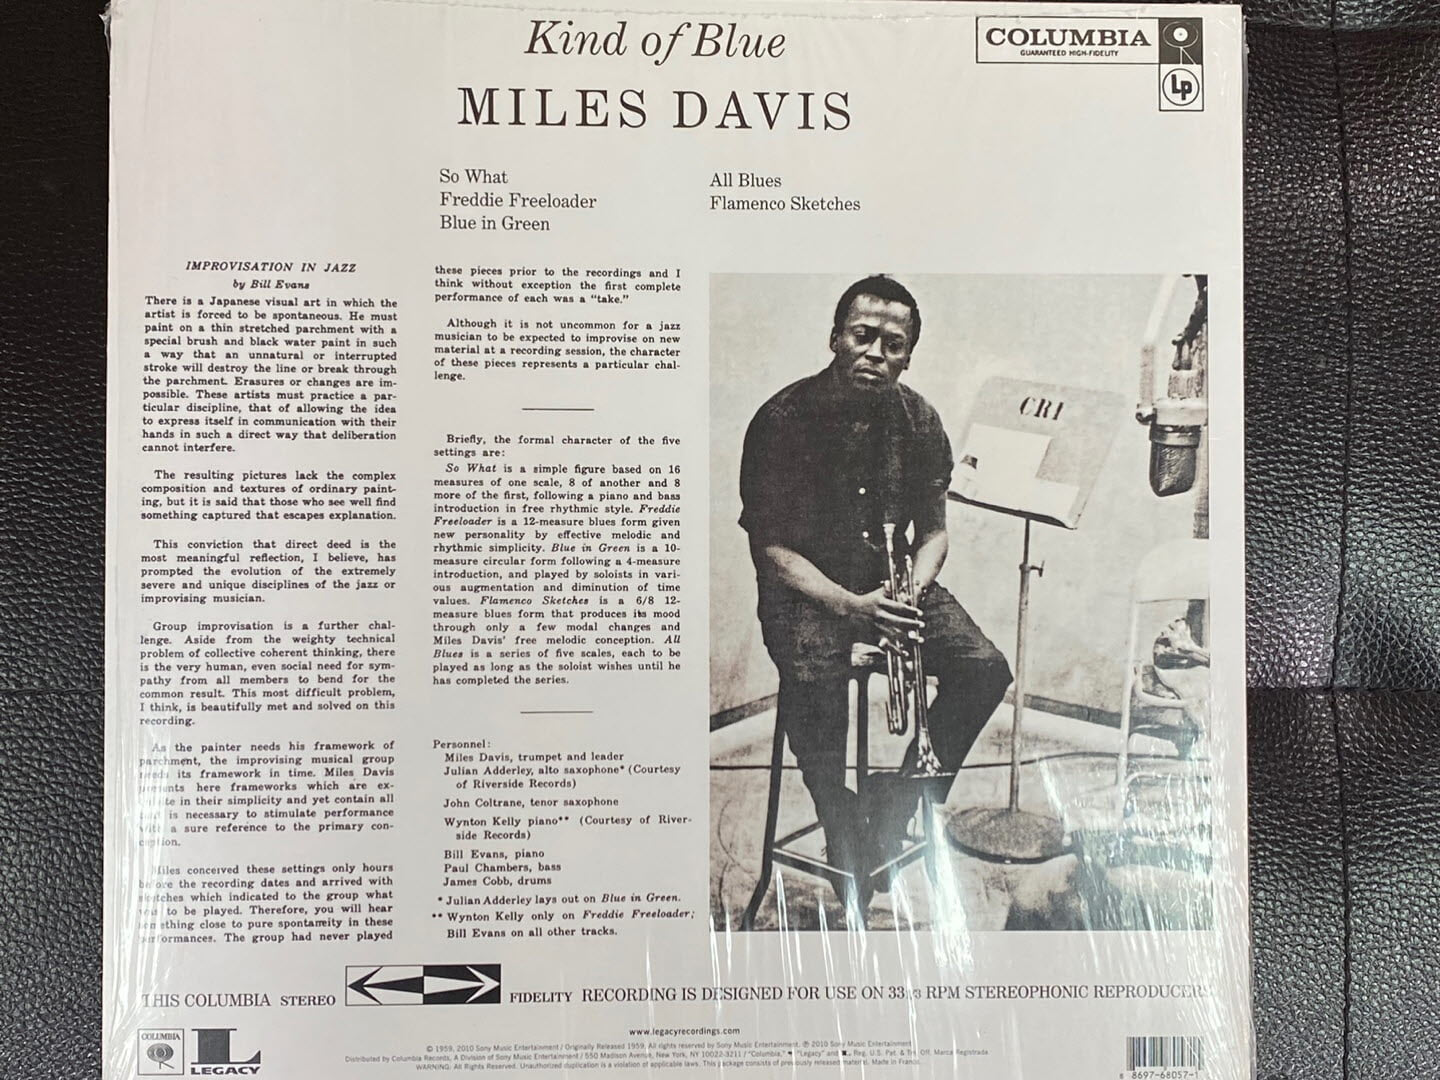 [LP] 마일즈 데이비스 - Miles Davis - Kind Of Blue LP [180G] [2010] [U.S반]